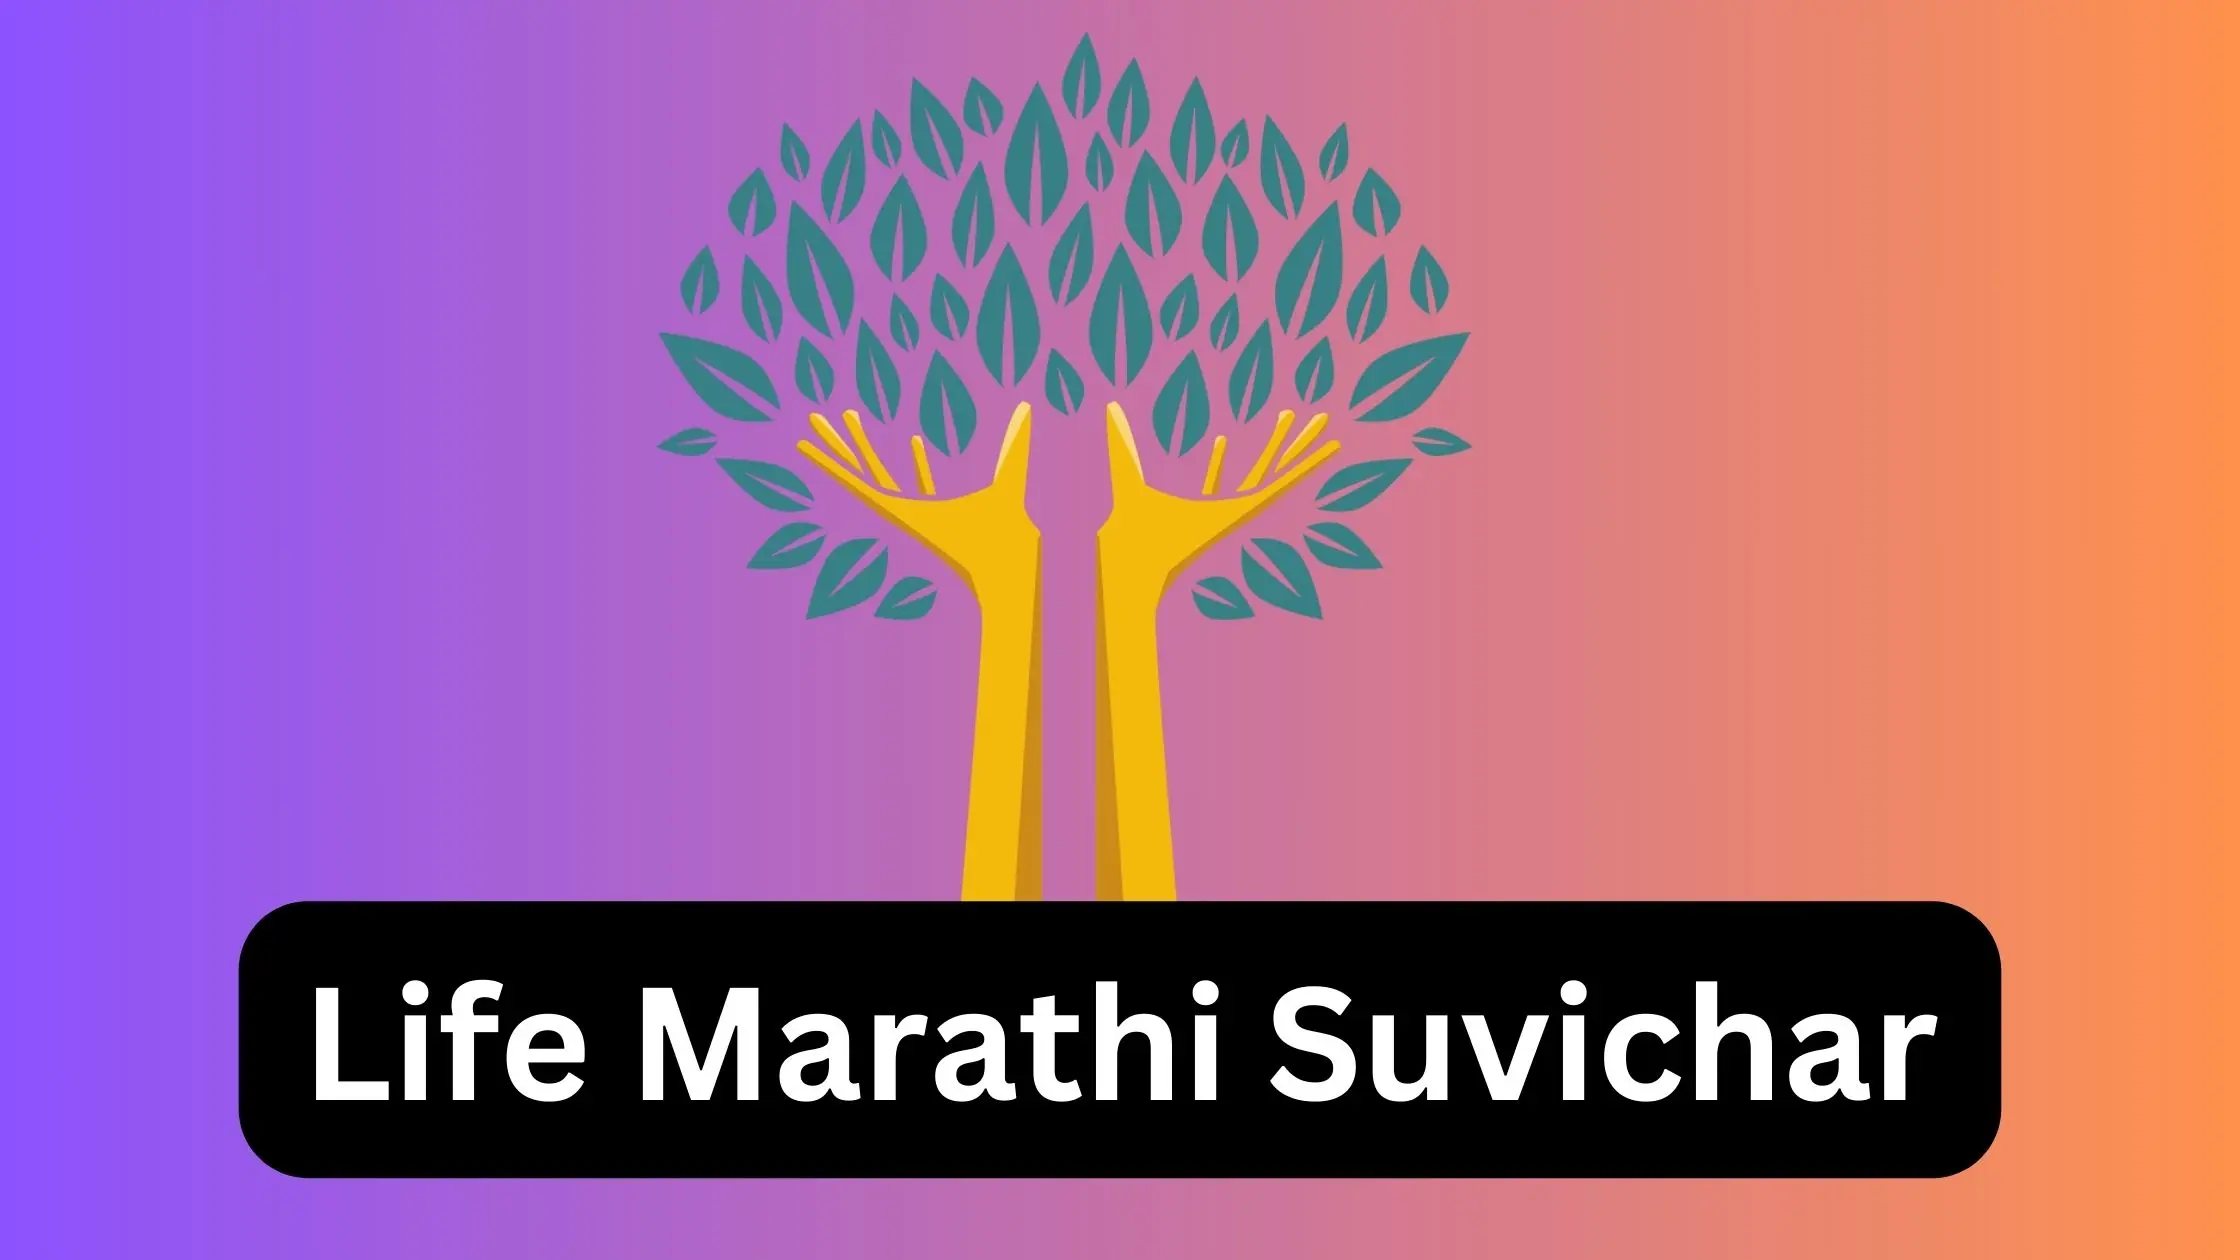 Life Marathi Suvichar